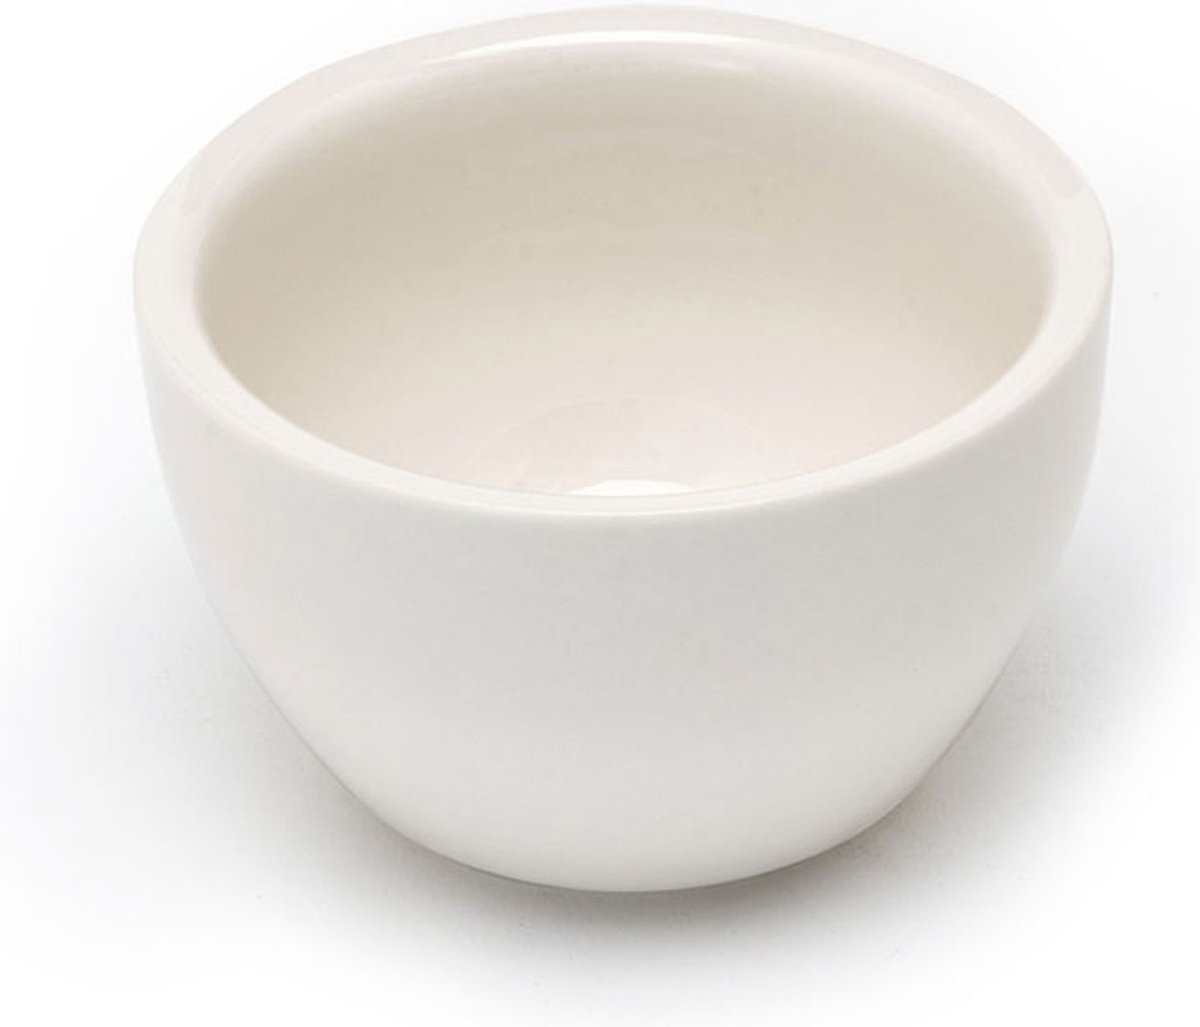 Rhino Coffee Gear - Cupping Bowl - White/White